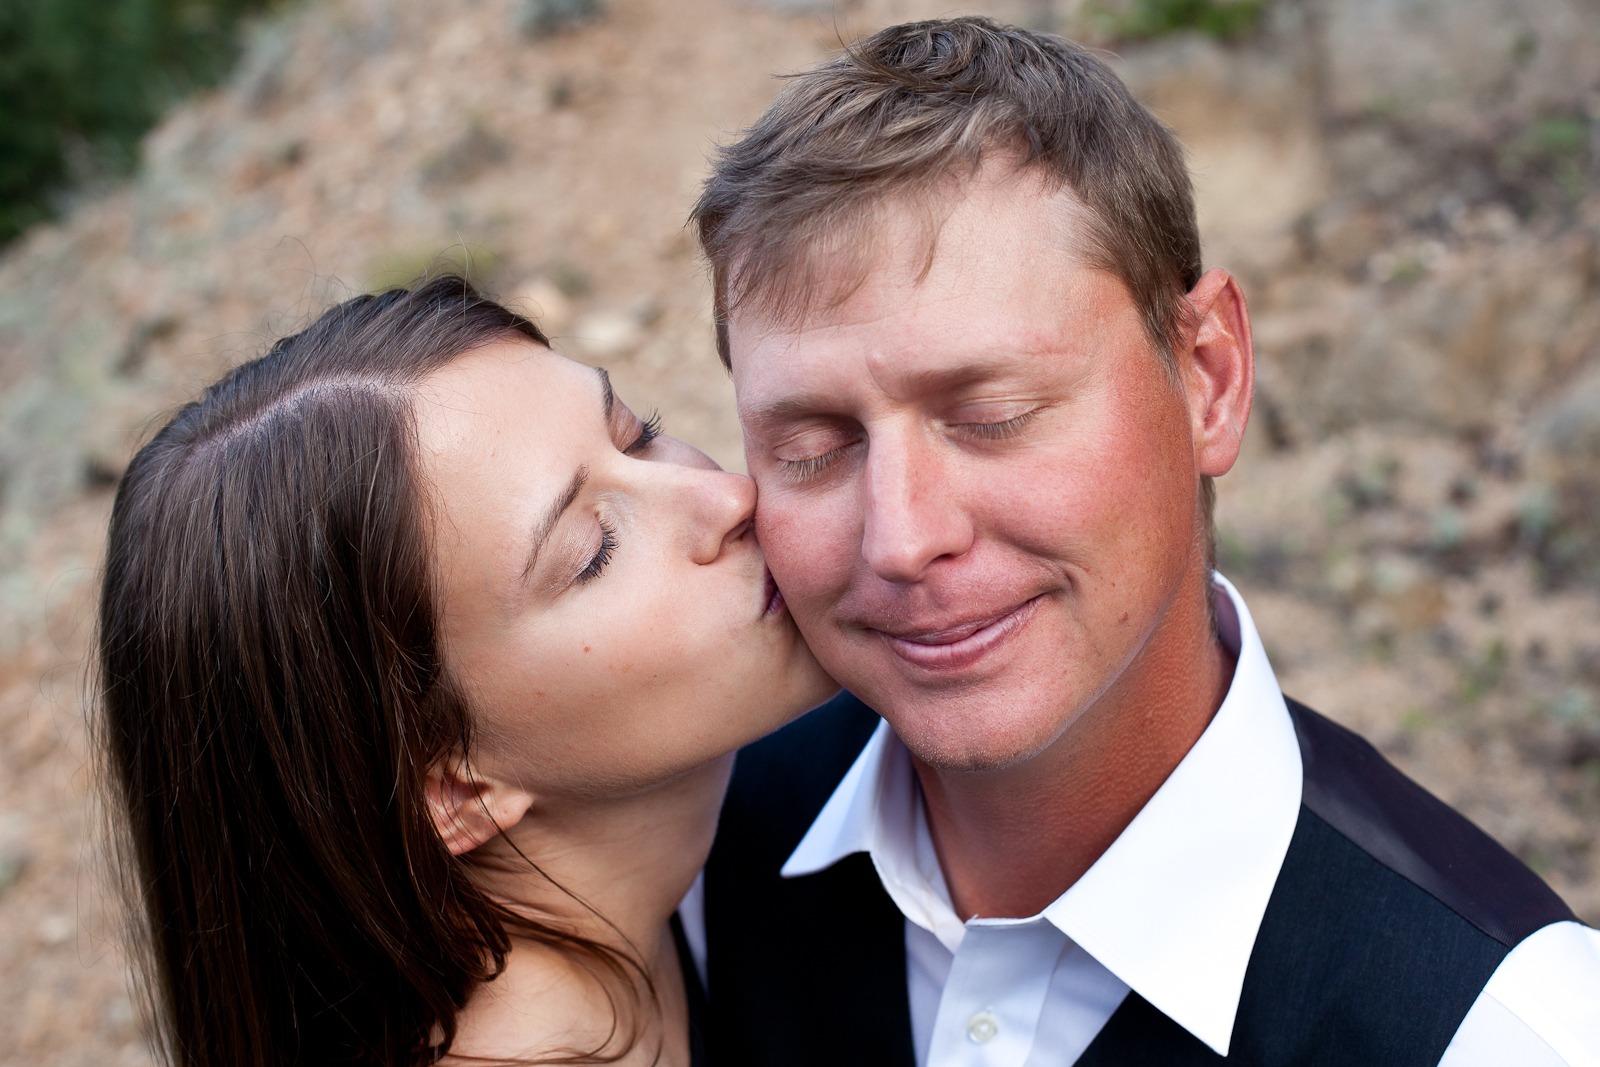 A woman kisses a man on the cheek